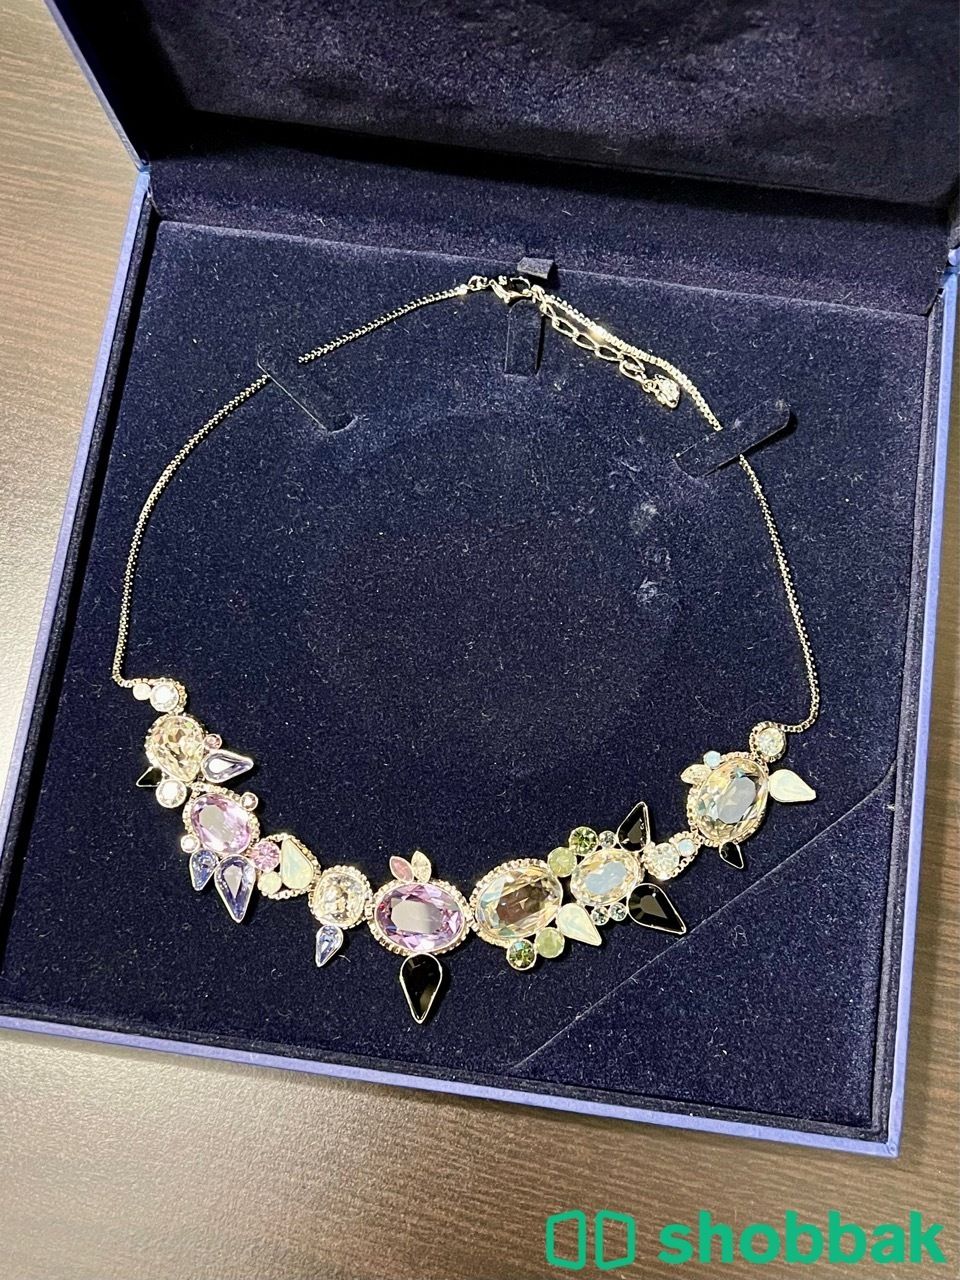 Swarovski Gemstones Necklace. شوارفسكي Shobbak Saudi Arabia